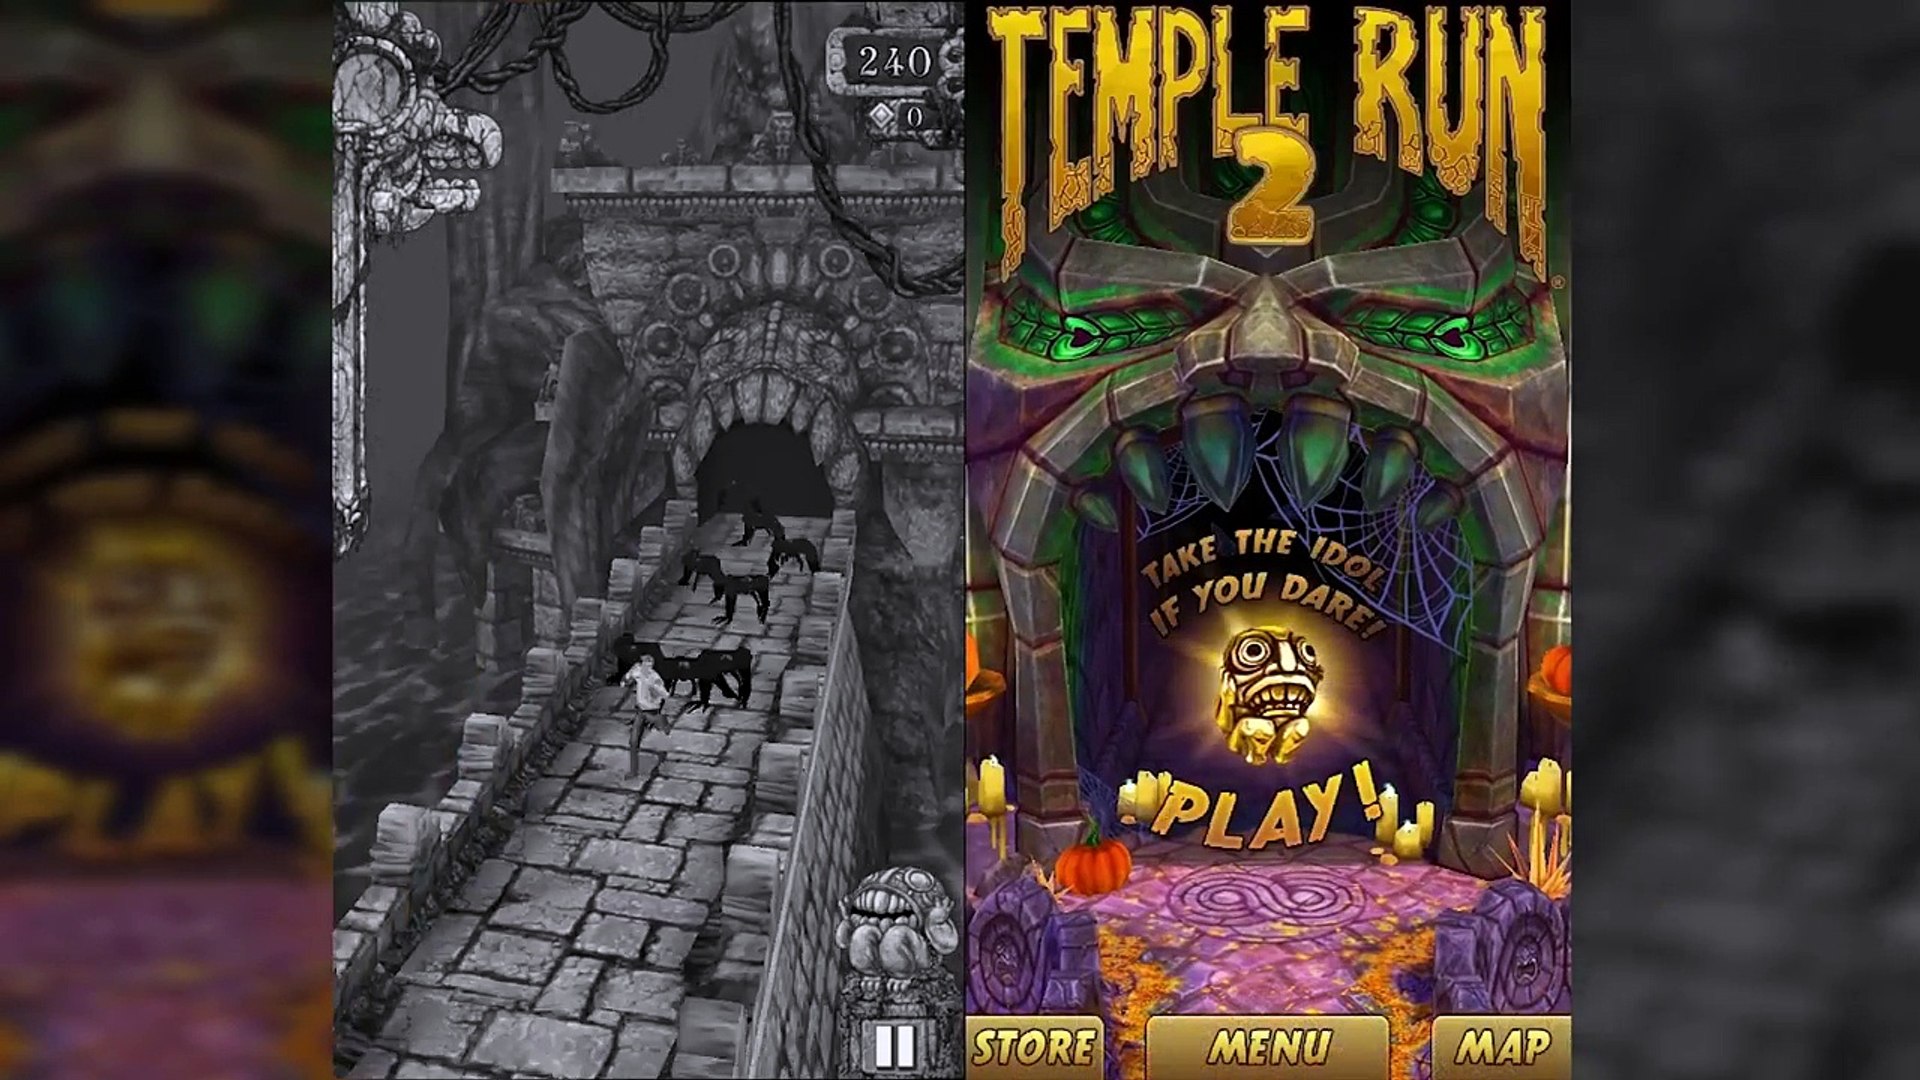 Top Temple Run Games: Temple Run 2,Temple Run,Temple Endless Run 3,Spirit  Run,Scary Temple Princess 